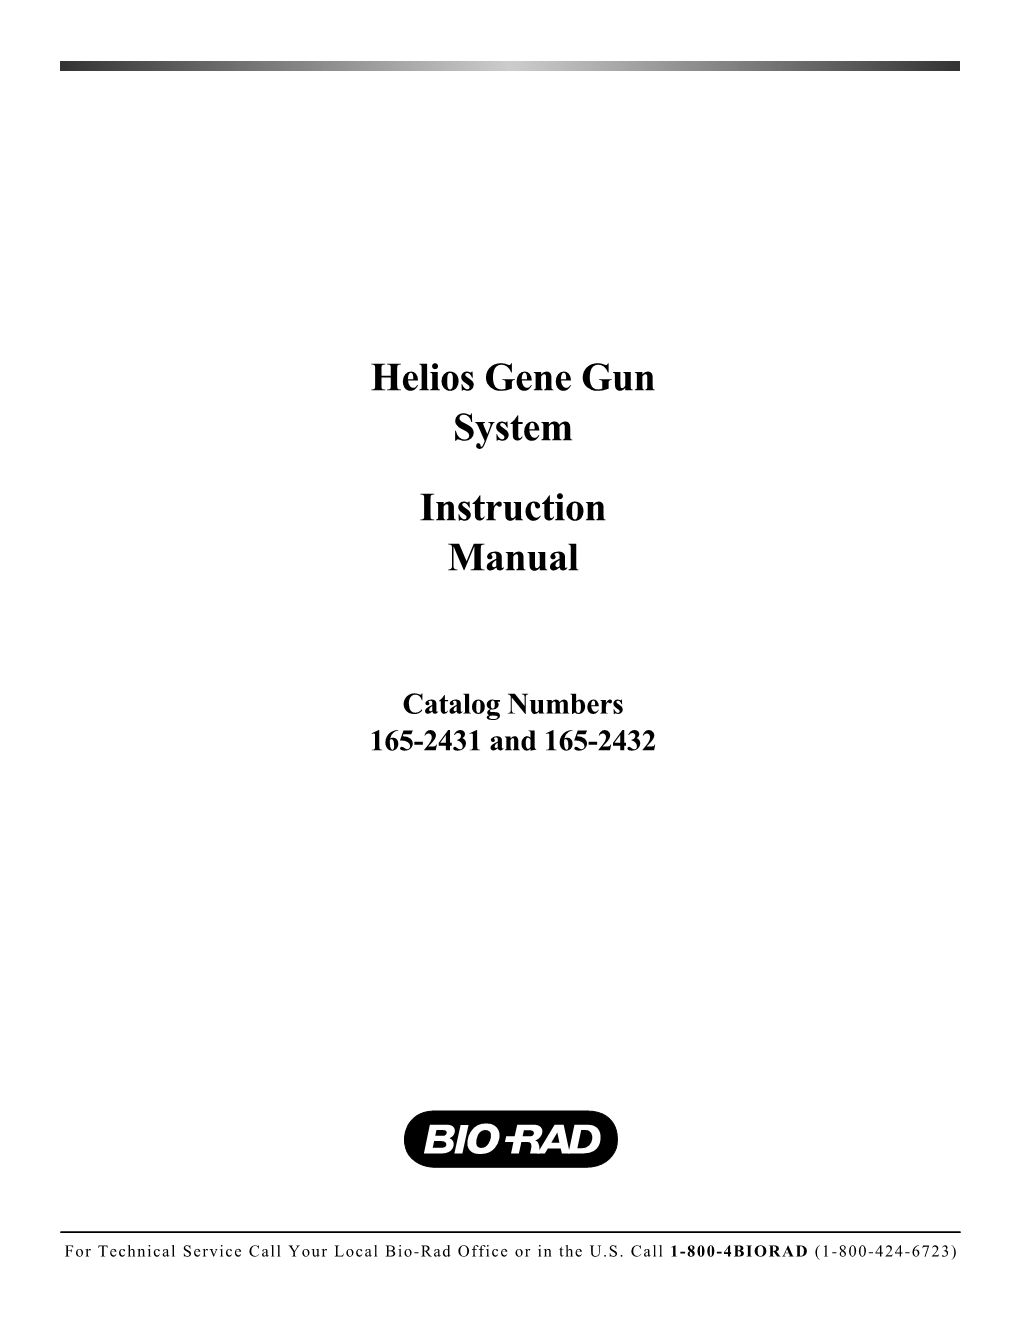 Helios Gene Gun System Instruction Manual